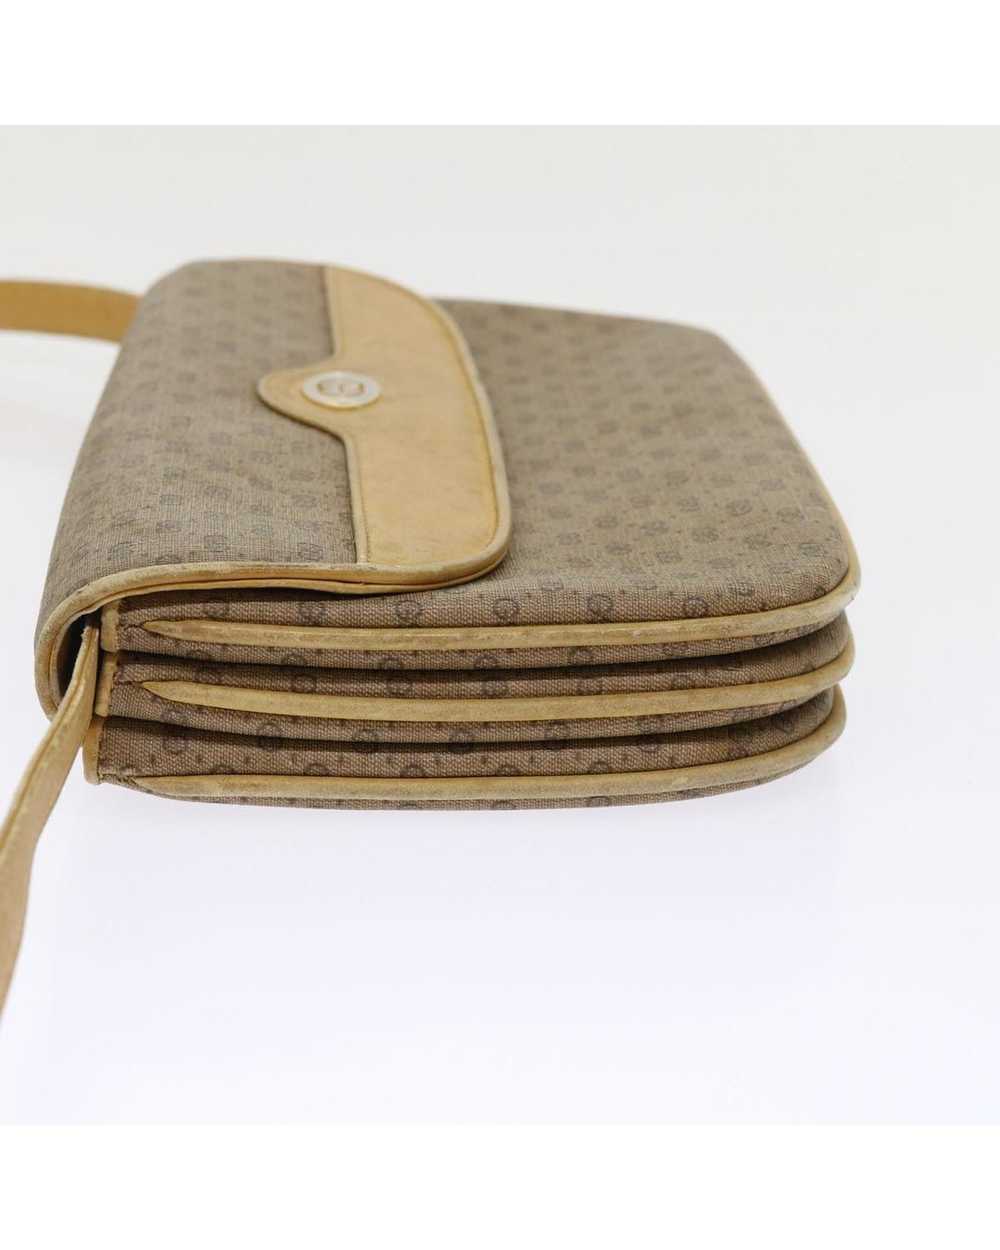 Gucci Luxury Gucci Beige Canvas Shoulder Bag - image 5